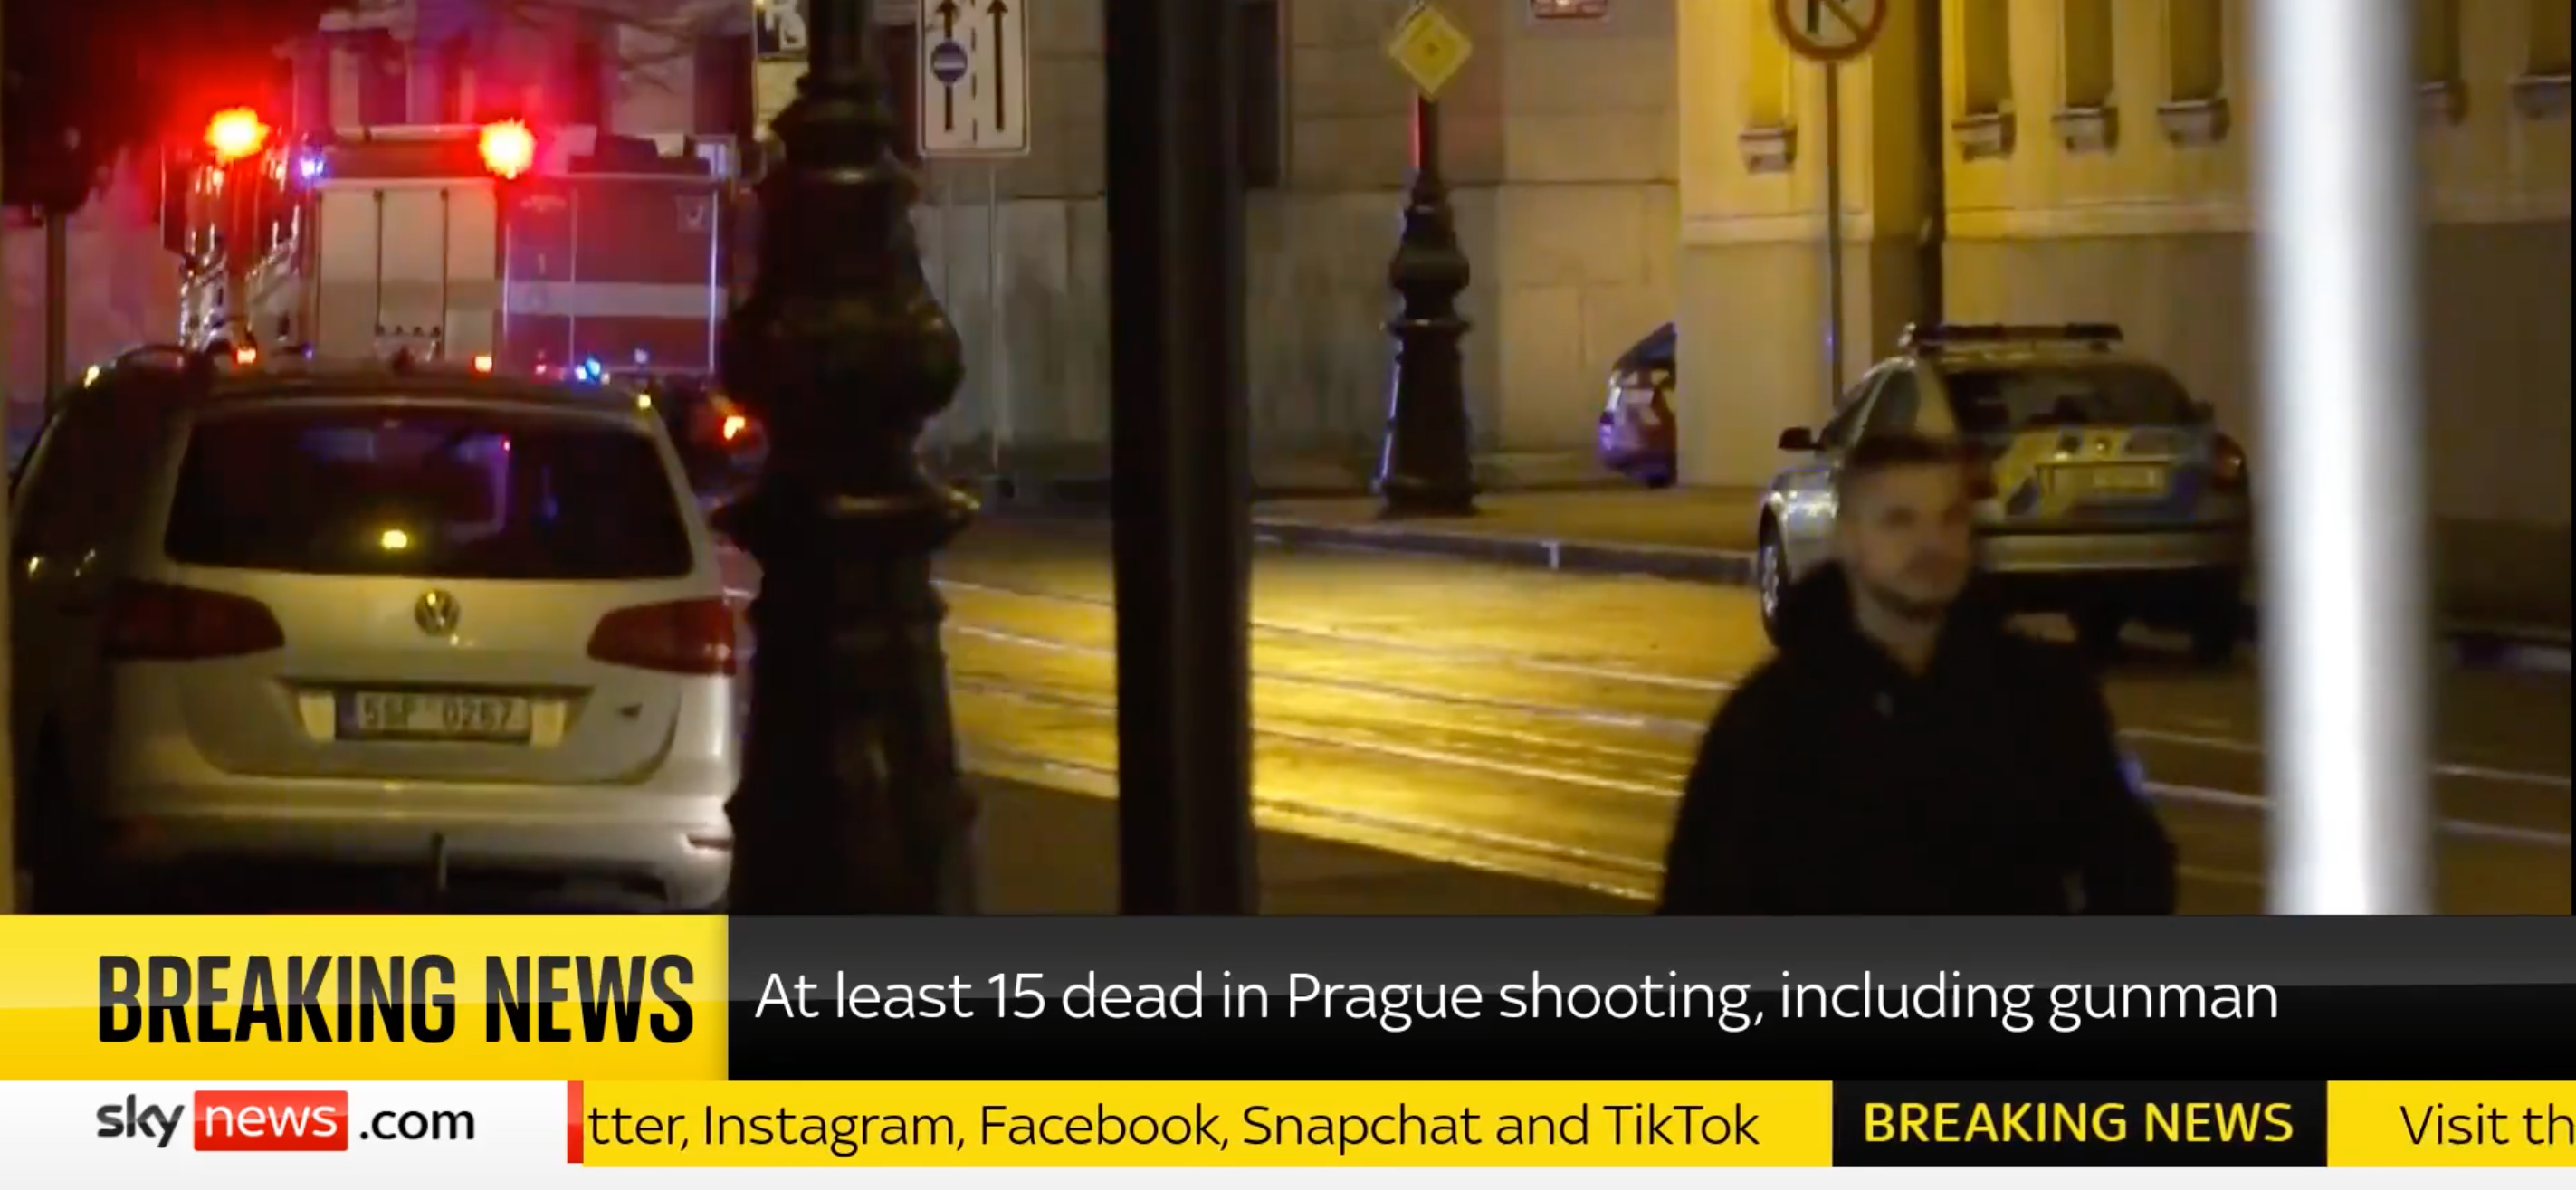 Prague Mass Shooting Leaves 15 Dead, Horrific Videos Surface